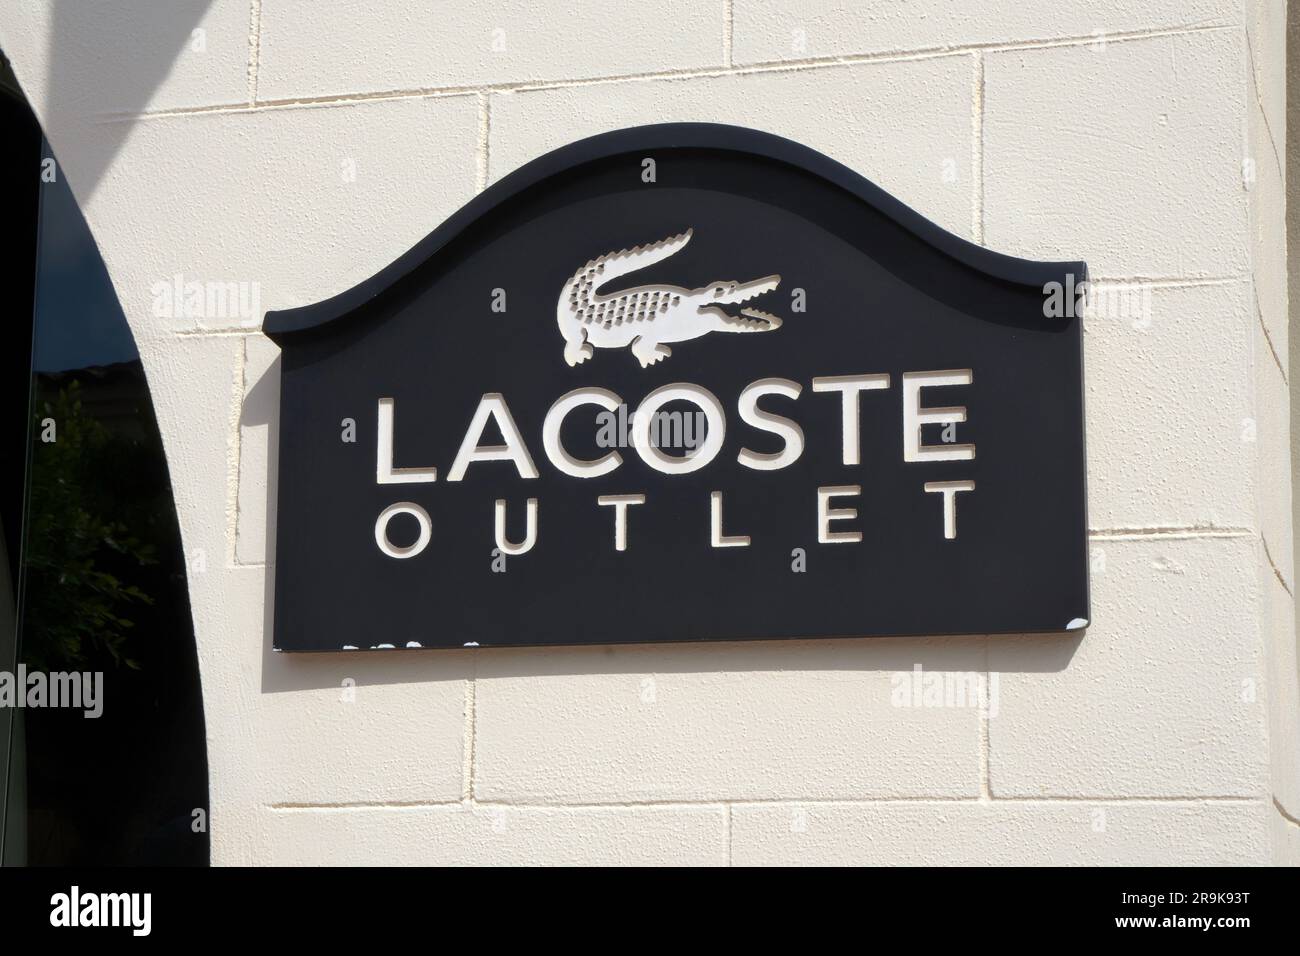 Palma de Mallorca, Spain - September 23, 2017: Lacoste outlet store logo. Lacoste is a french company selling clothing, footwear, sportswear, eyewear. Stock Photo